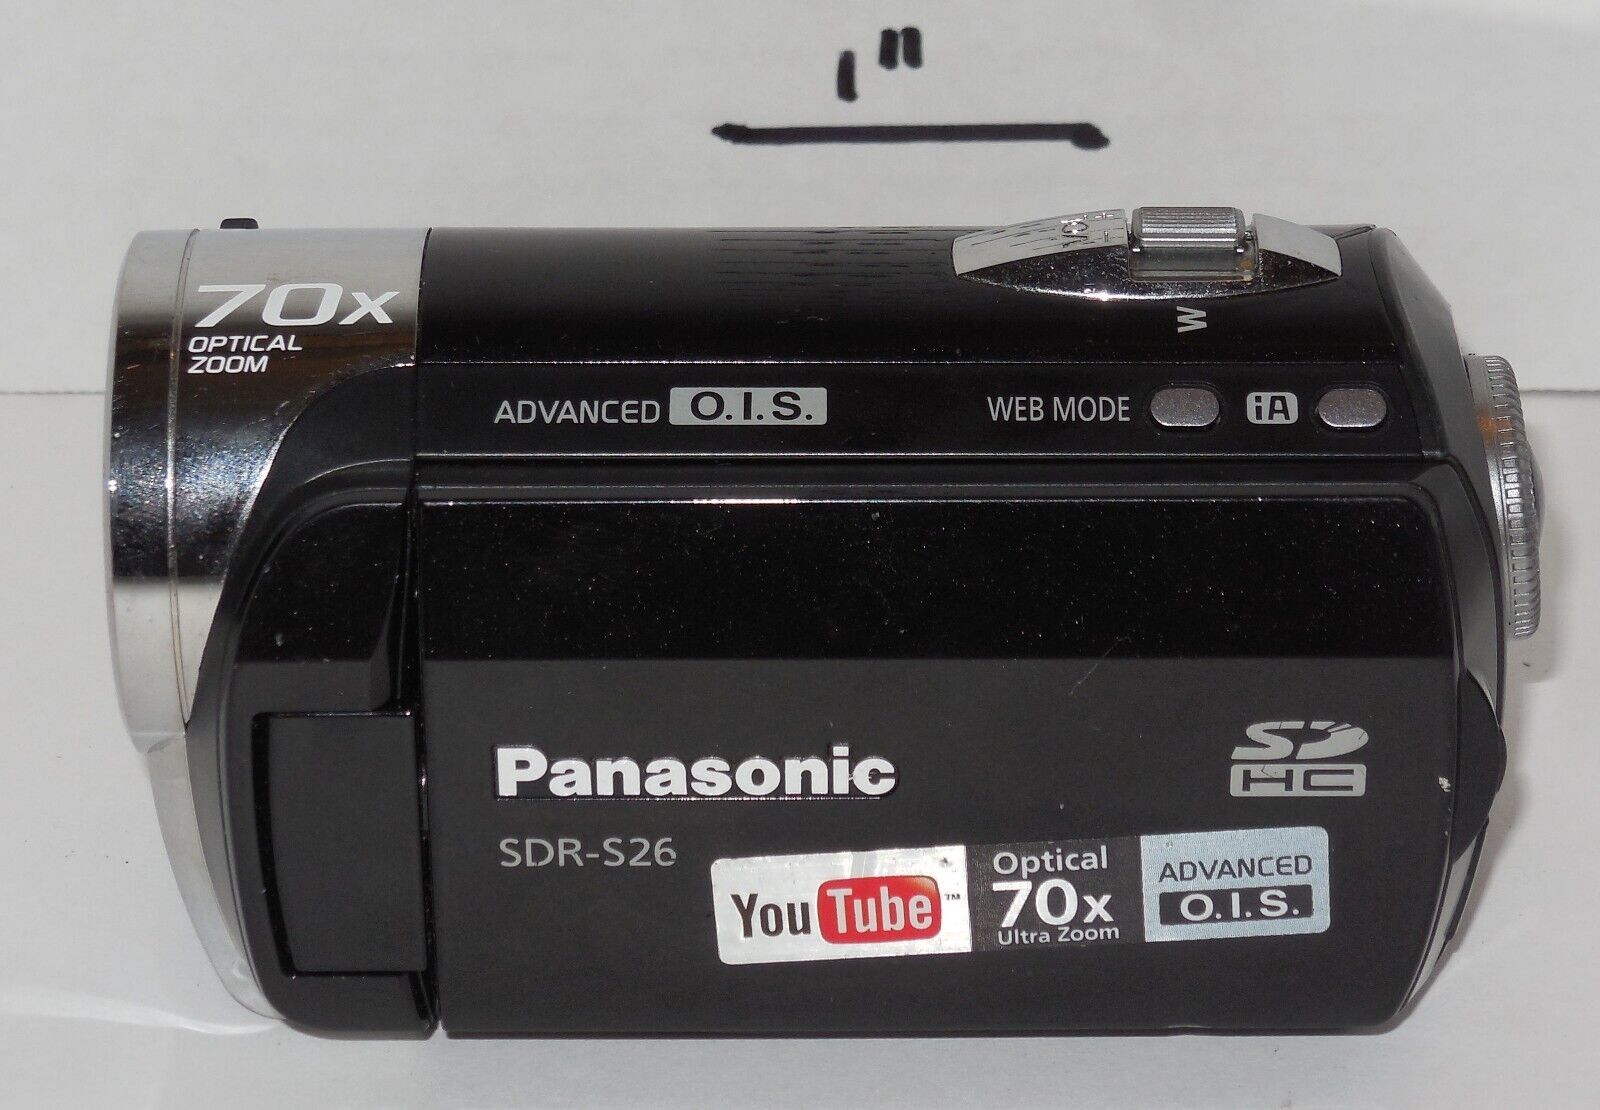 Panasonic SDR-S26 480p Black Digital Camcorder 70x Optical Zoom with SD Card - $144.10